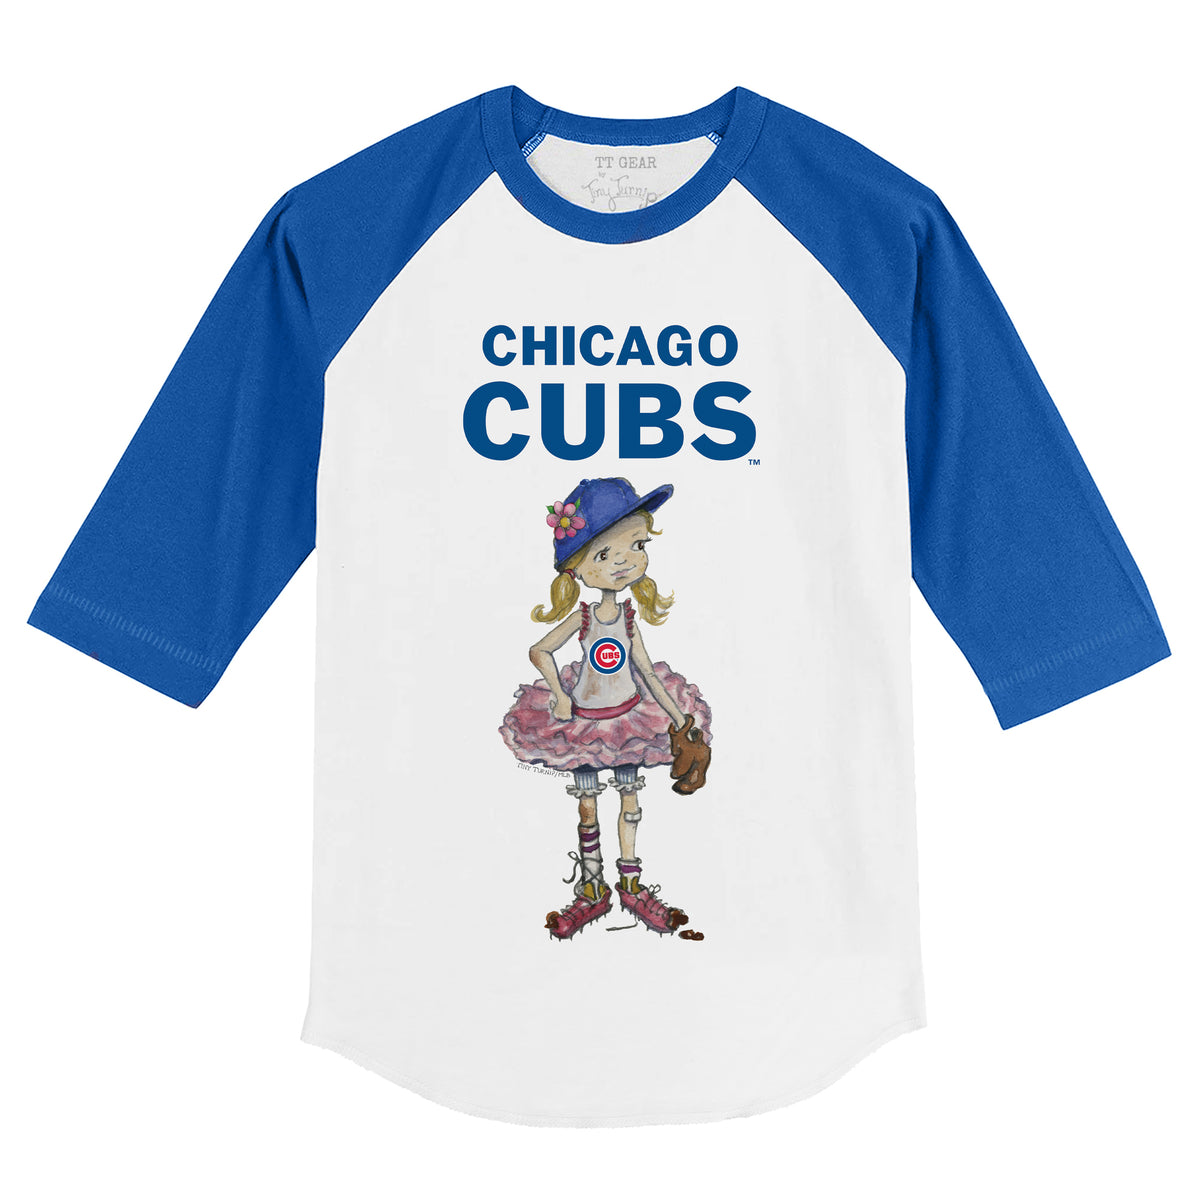 Chicago Cubs Babes 3/4 Royal Blue Sleeve Raglan